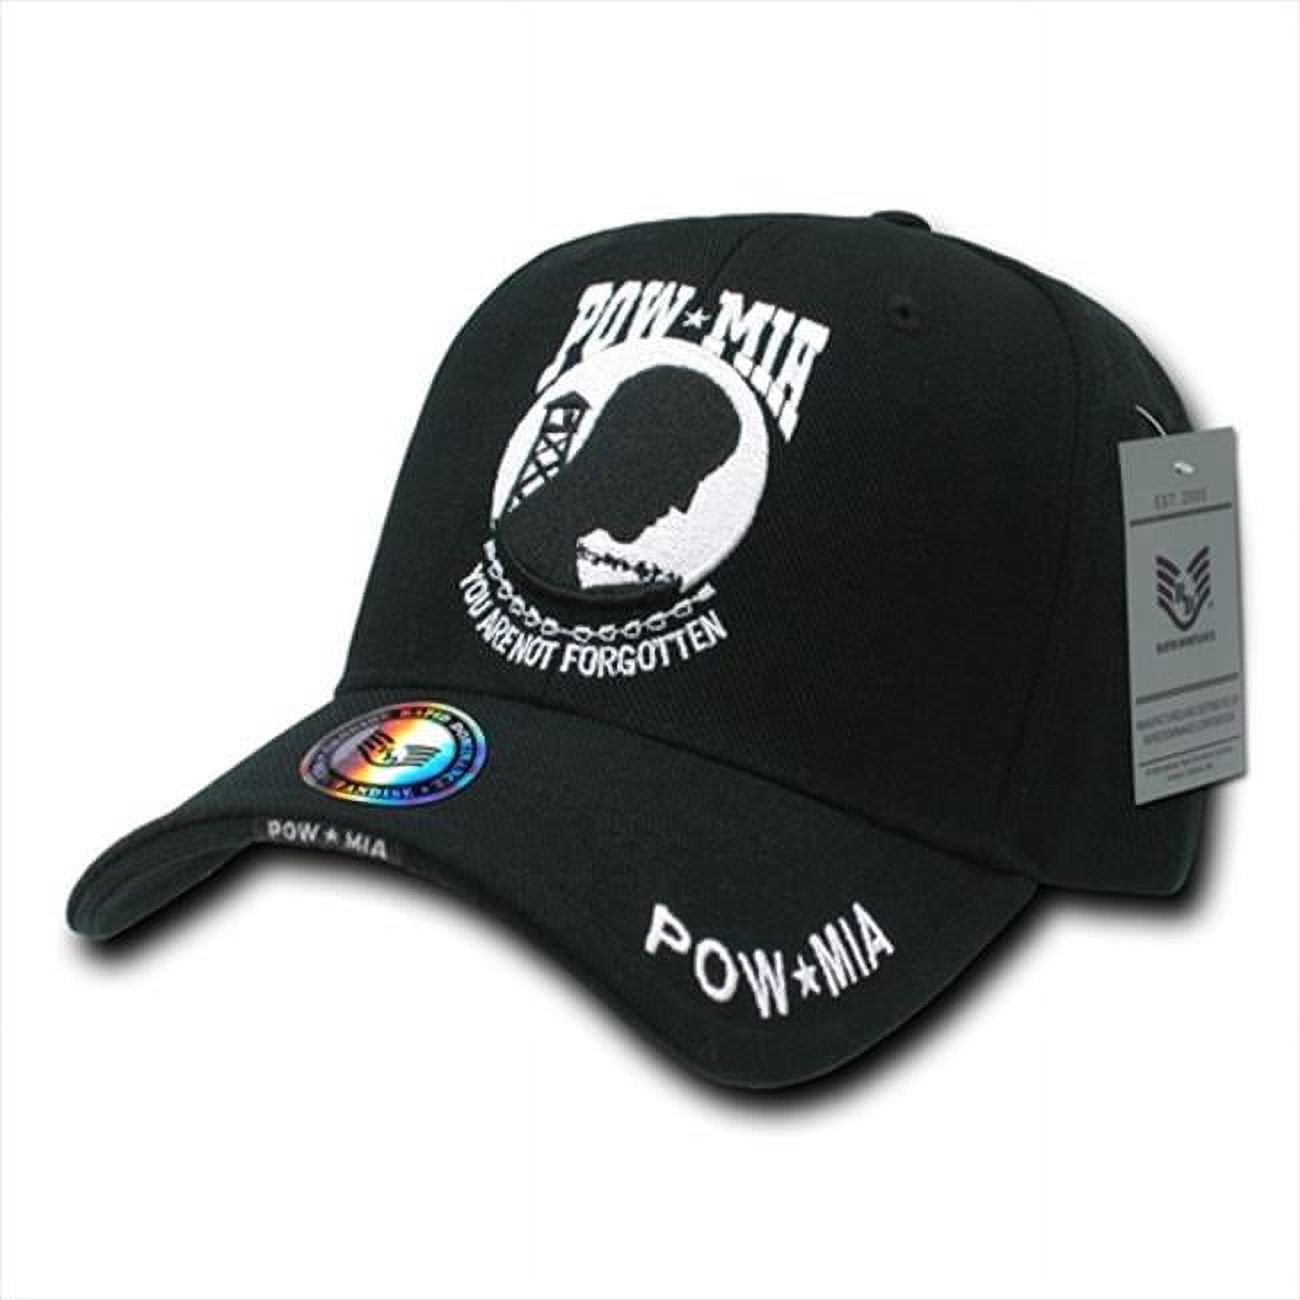 Rapid Dominance RD-POWMIA Deluxe Military Baseball Caps- Pow Star Mia- Black - image 1 of 2